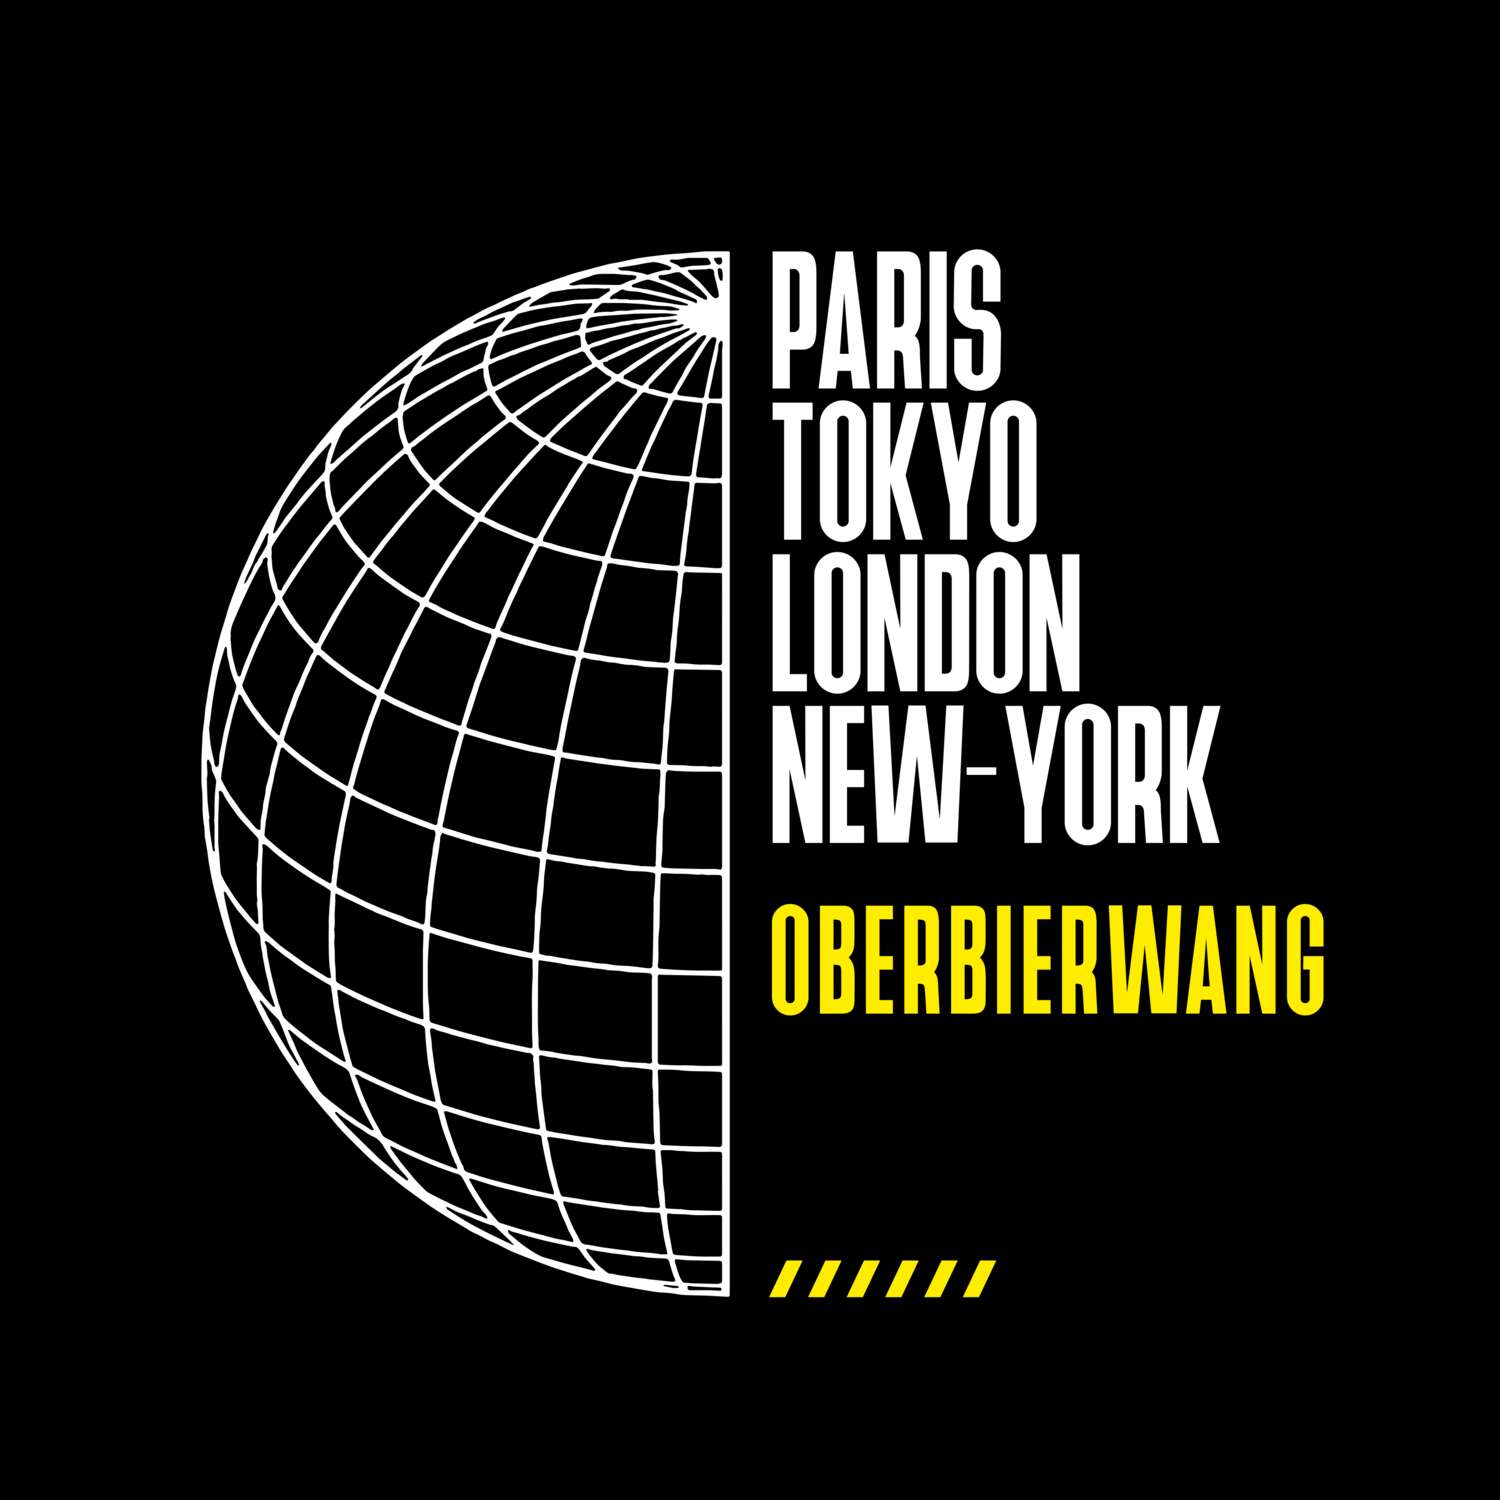 Oberbierwang T-Shirt »Paris Tokyo London«